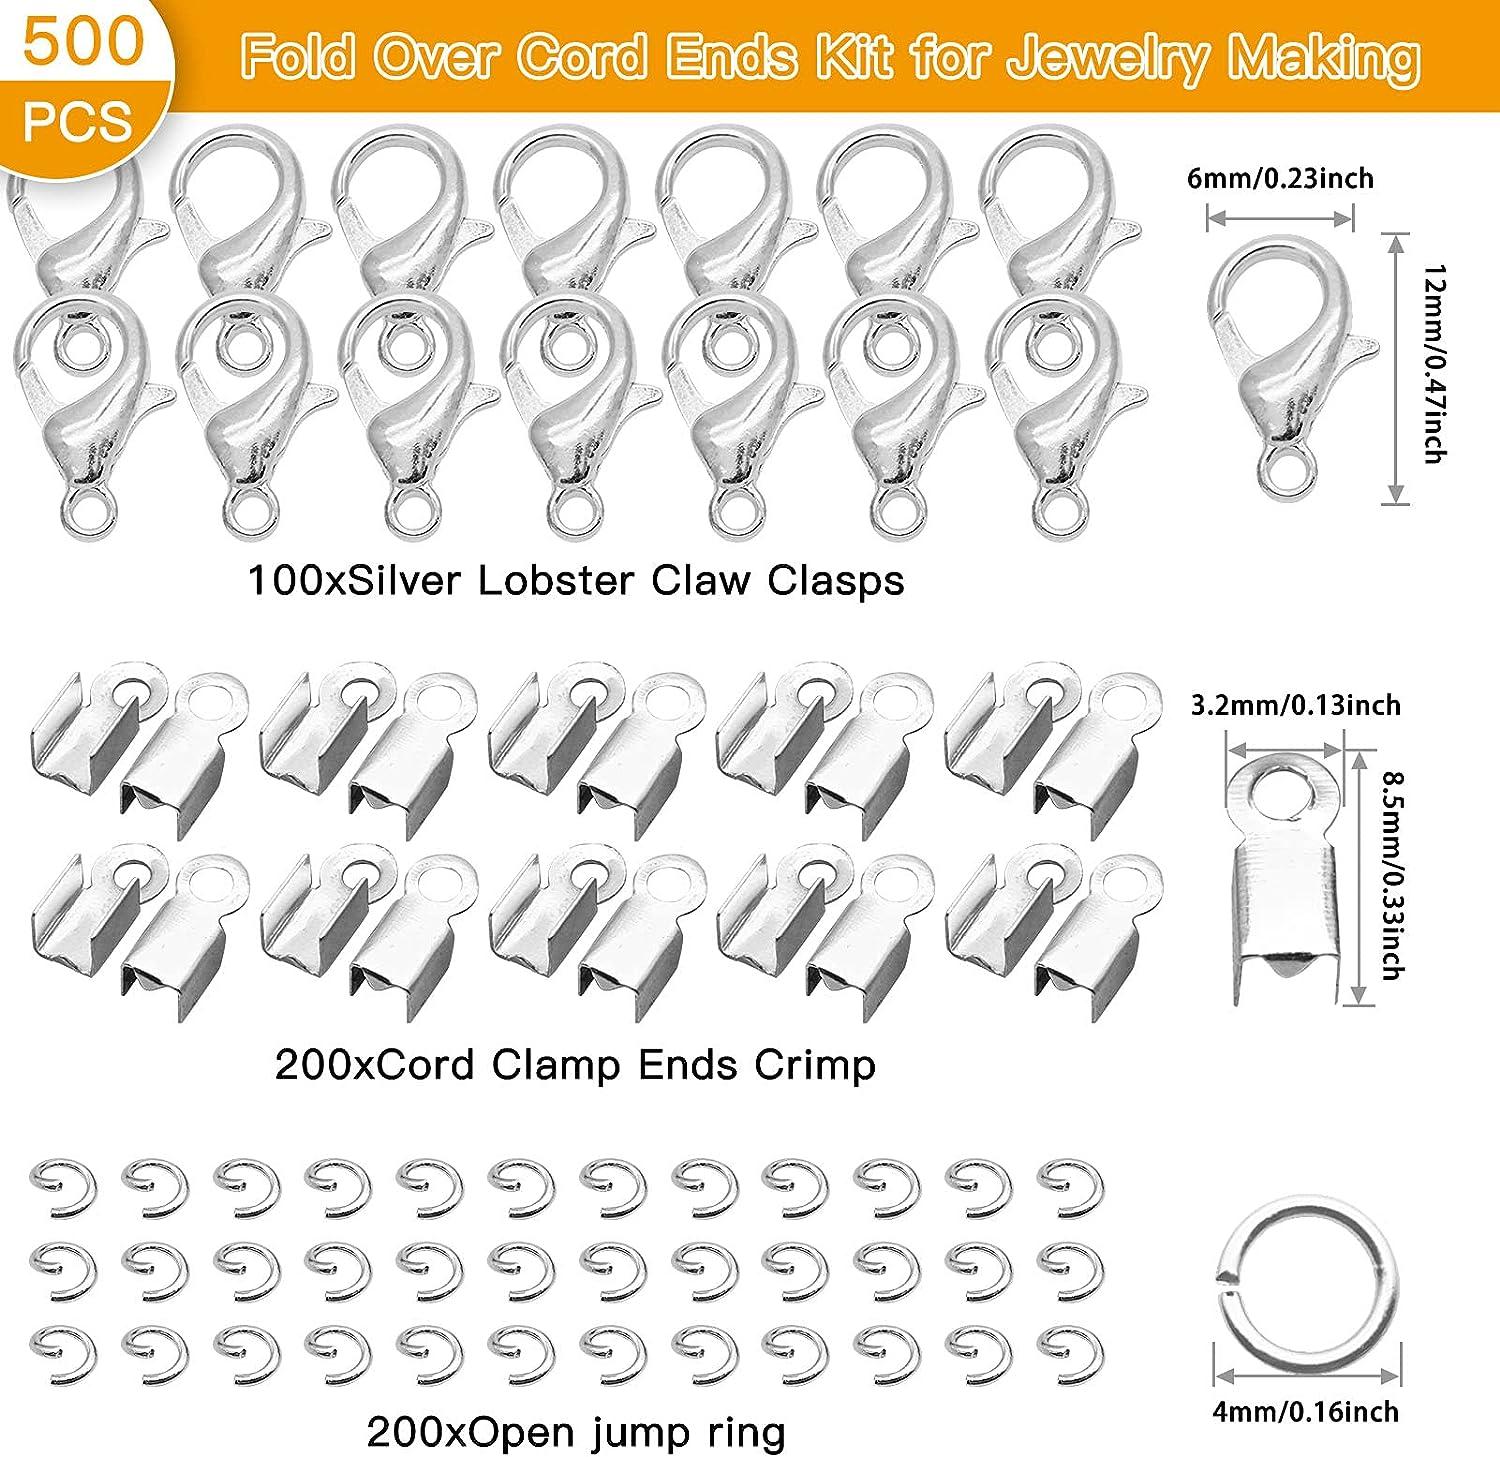 Nickel Plated 6mm & 9mm Split Rings & Key Chain Rings w/ Chain Kit 600 Pcs